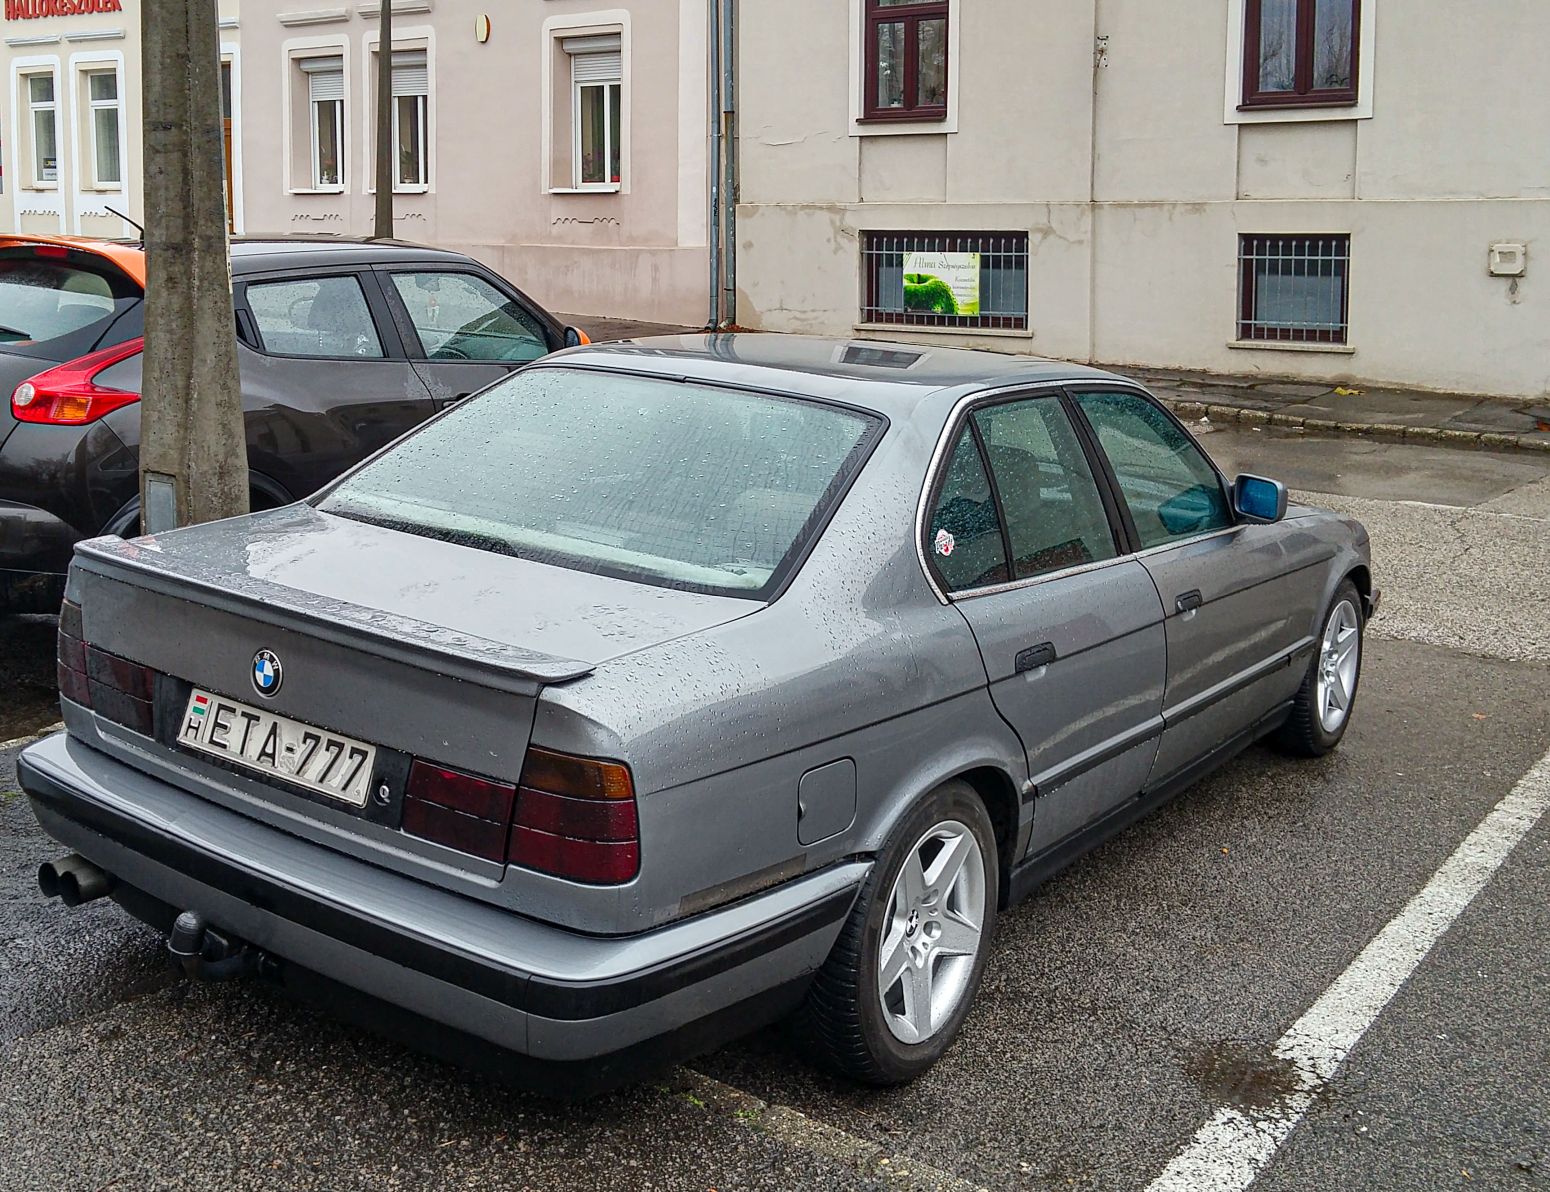 Rückansicht: BMW 5 e34 Coupé. Aufnahme: 12.2021.